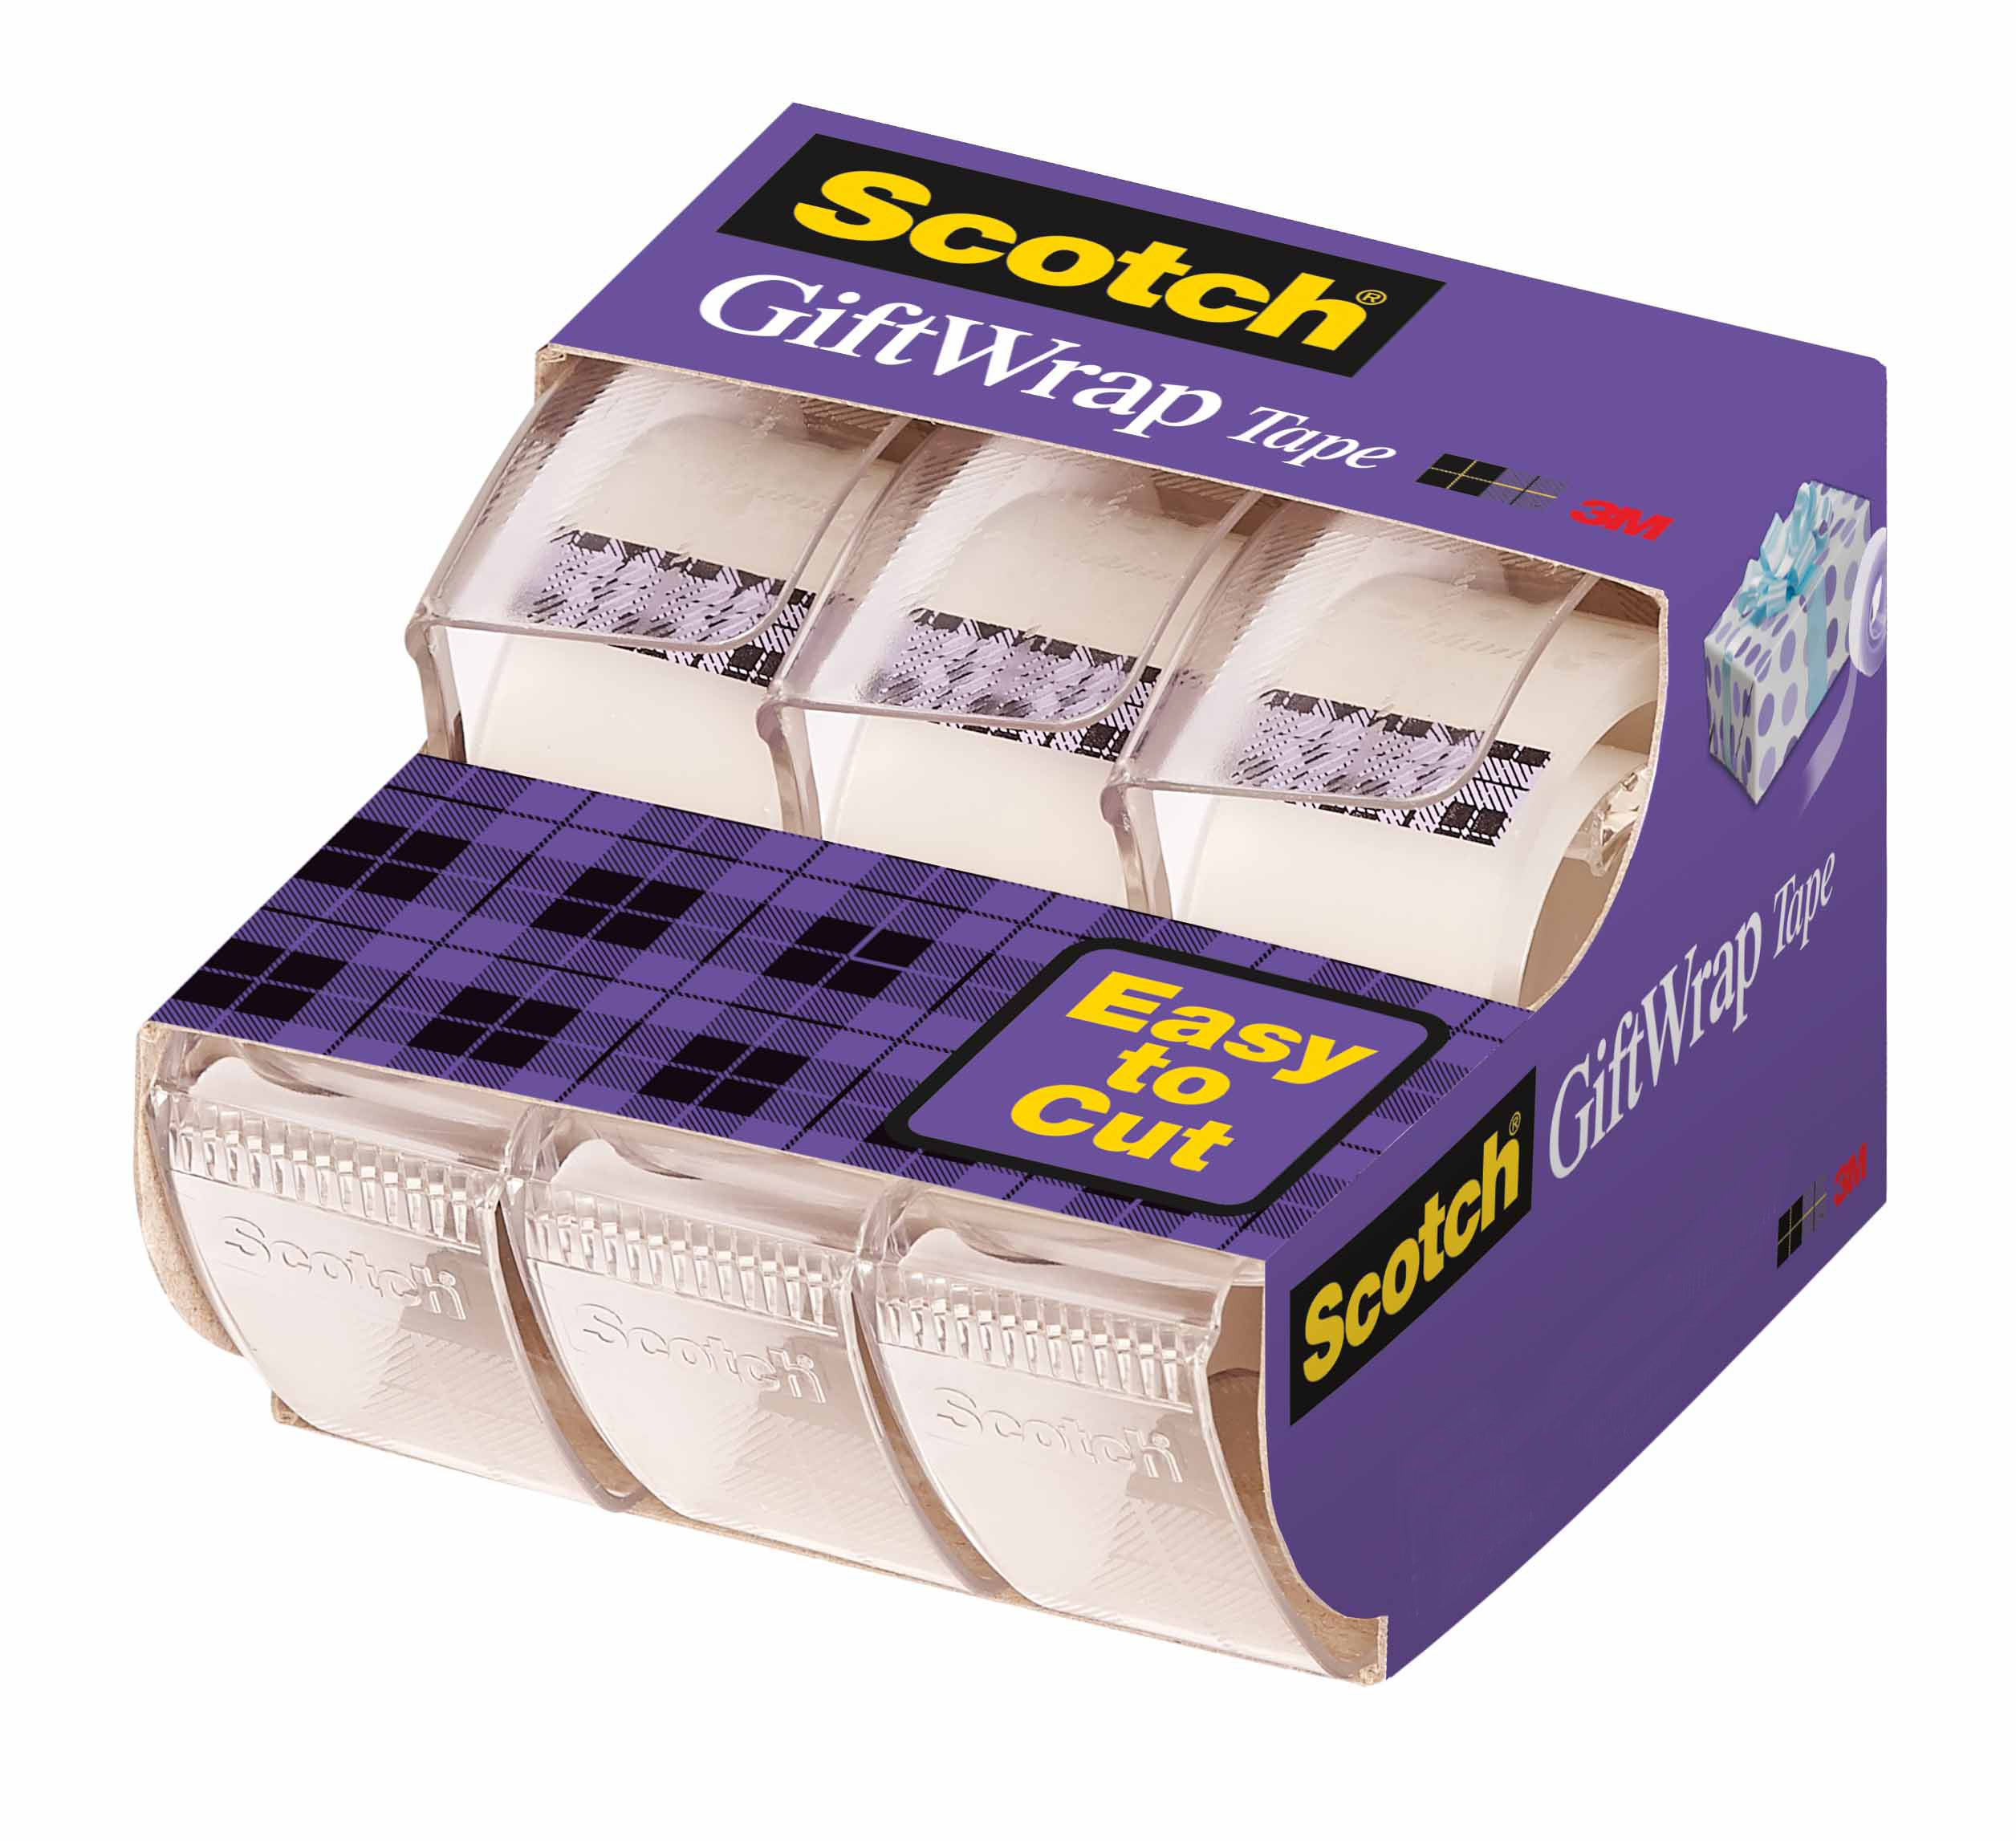 Scotch Gift Wrap Tape, 3/4 in. x 325 in., 3 Dispensers